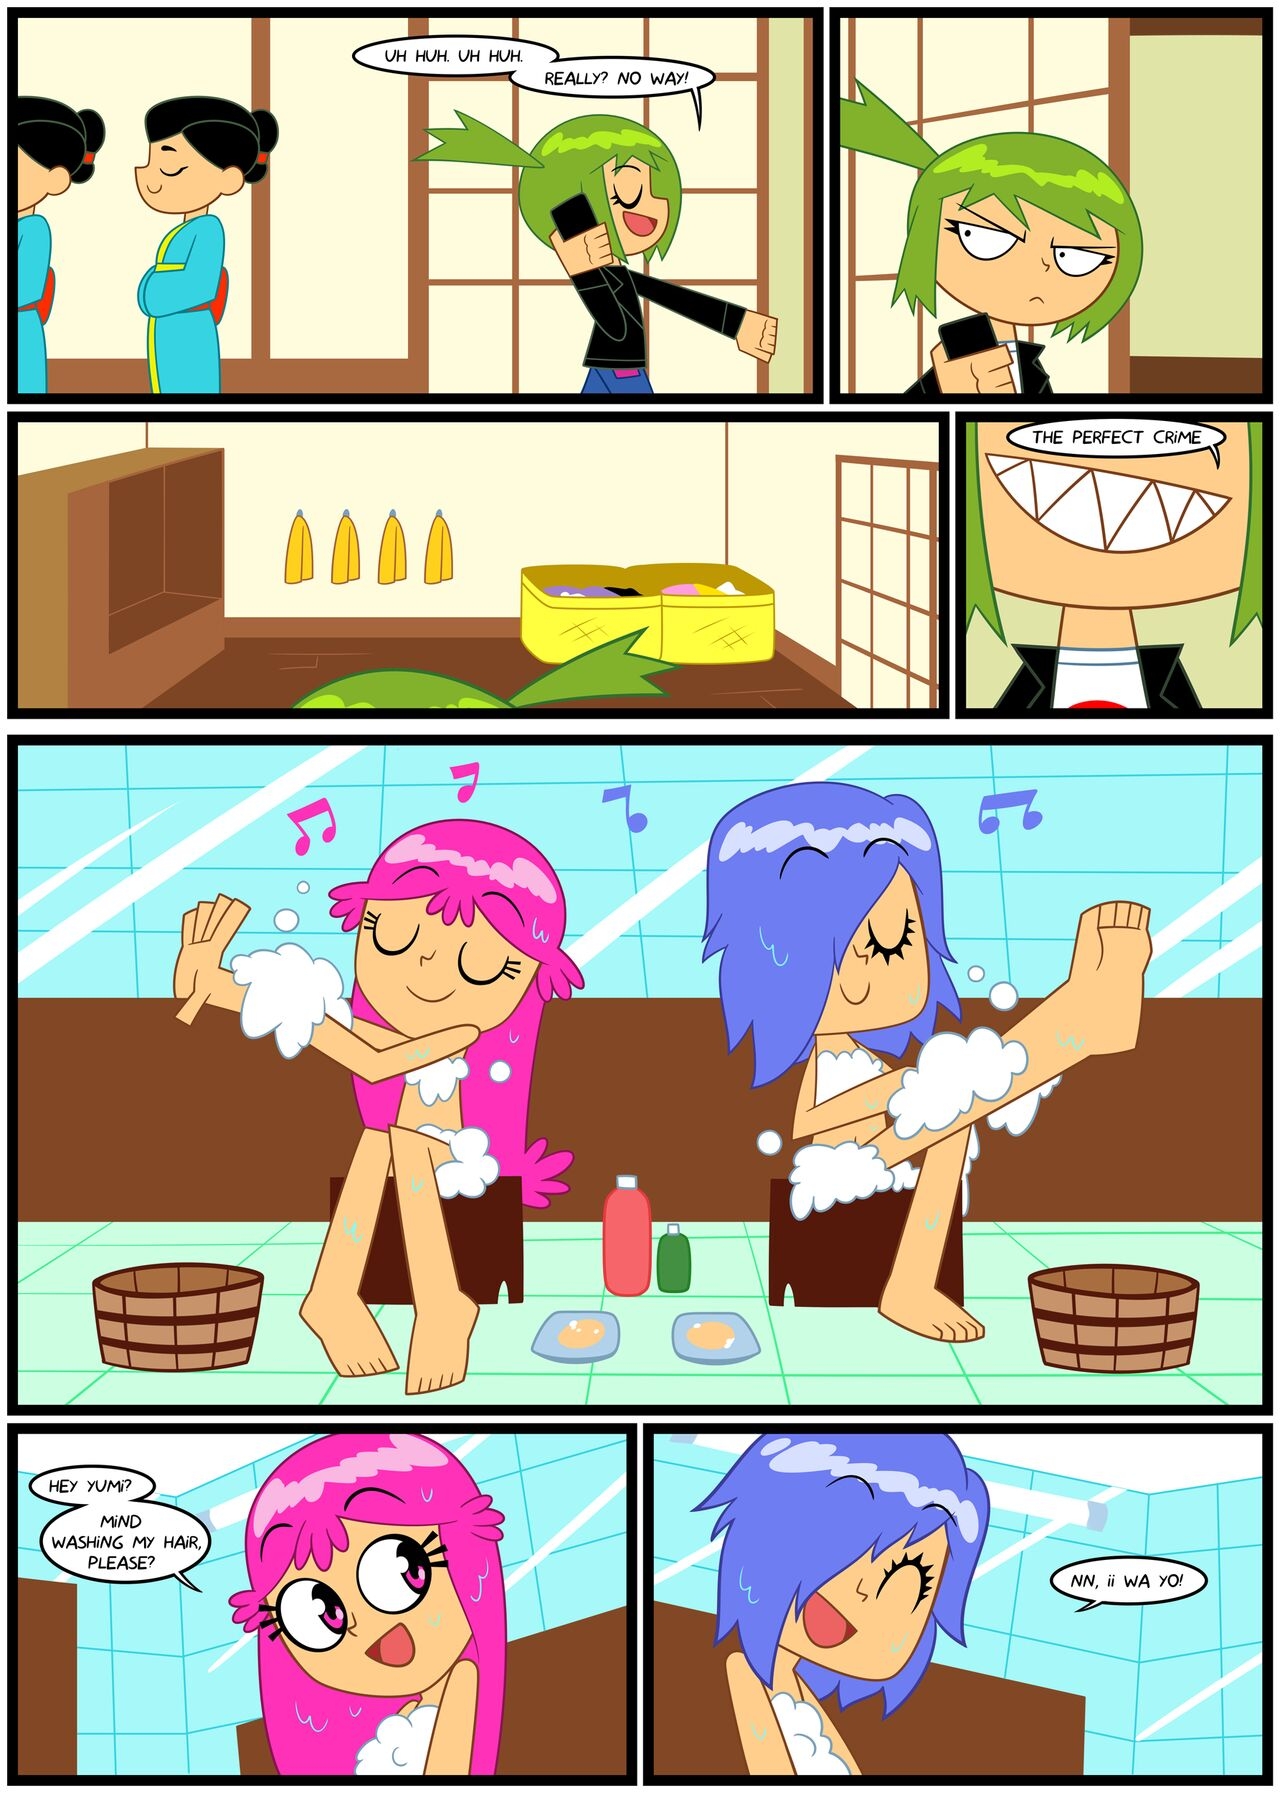 [Xierra099] Towel Trouble (Puffy AmiYumi) (Ongoing) 5